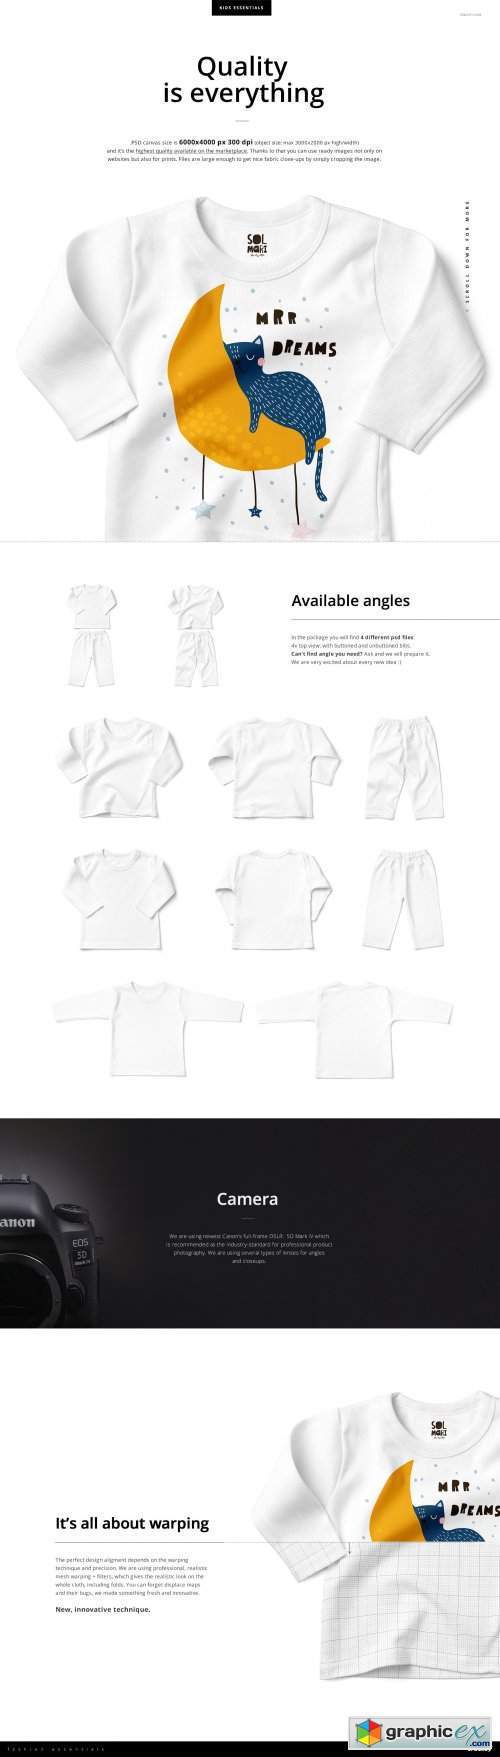 Baby Long Sleeve Pyjama Mockup Set